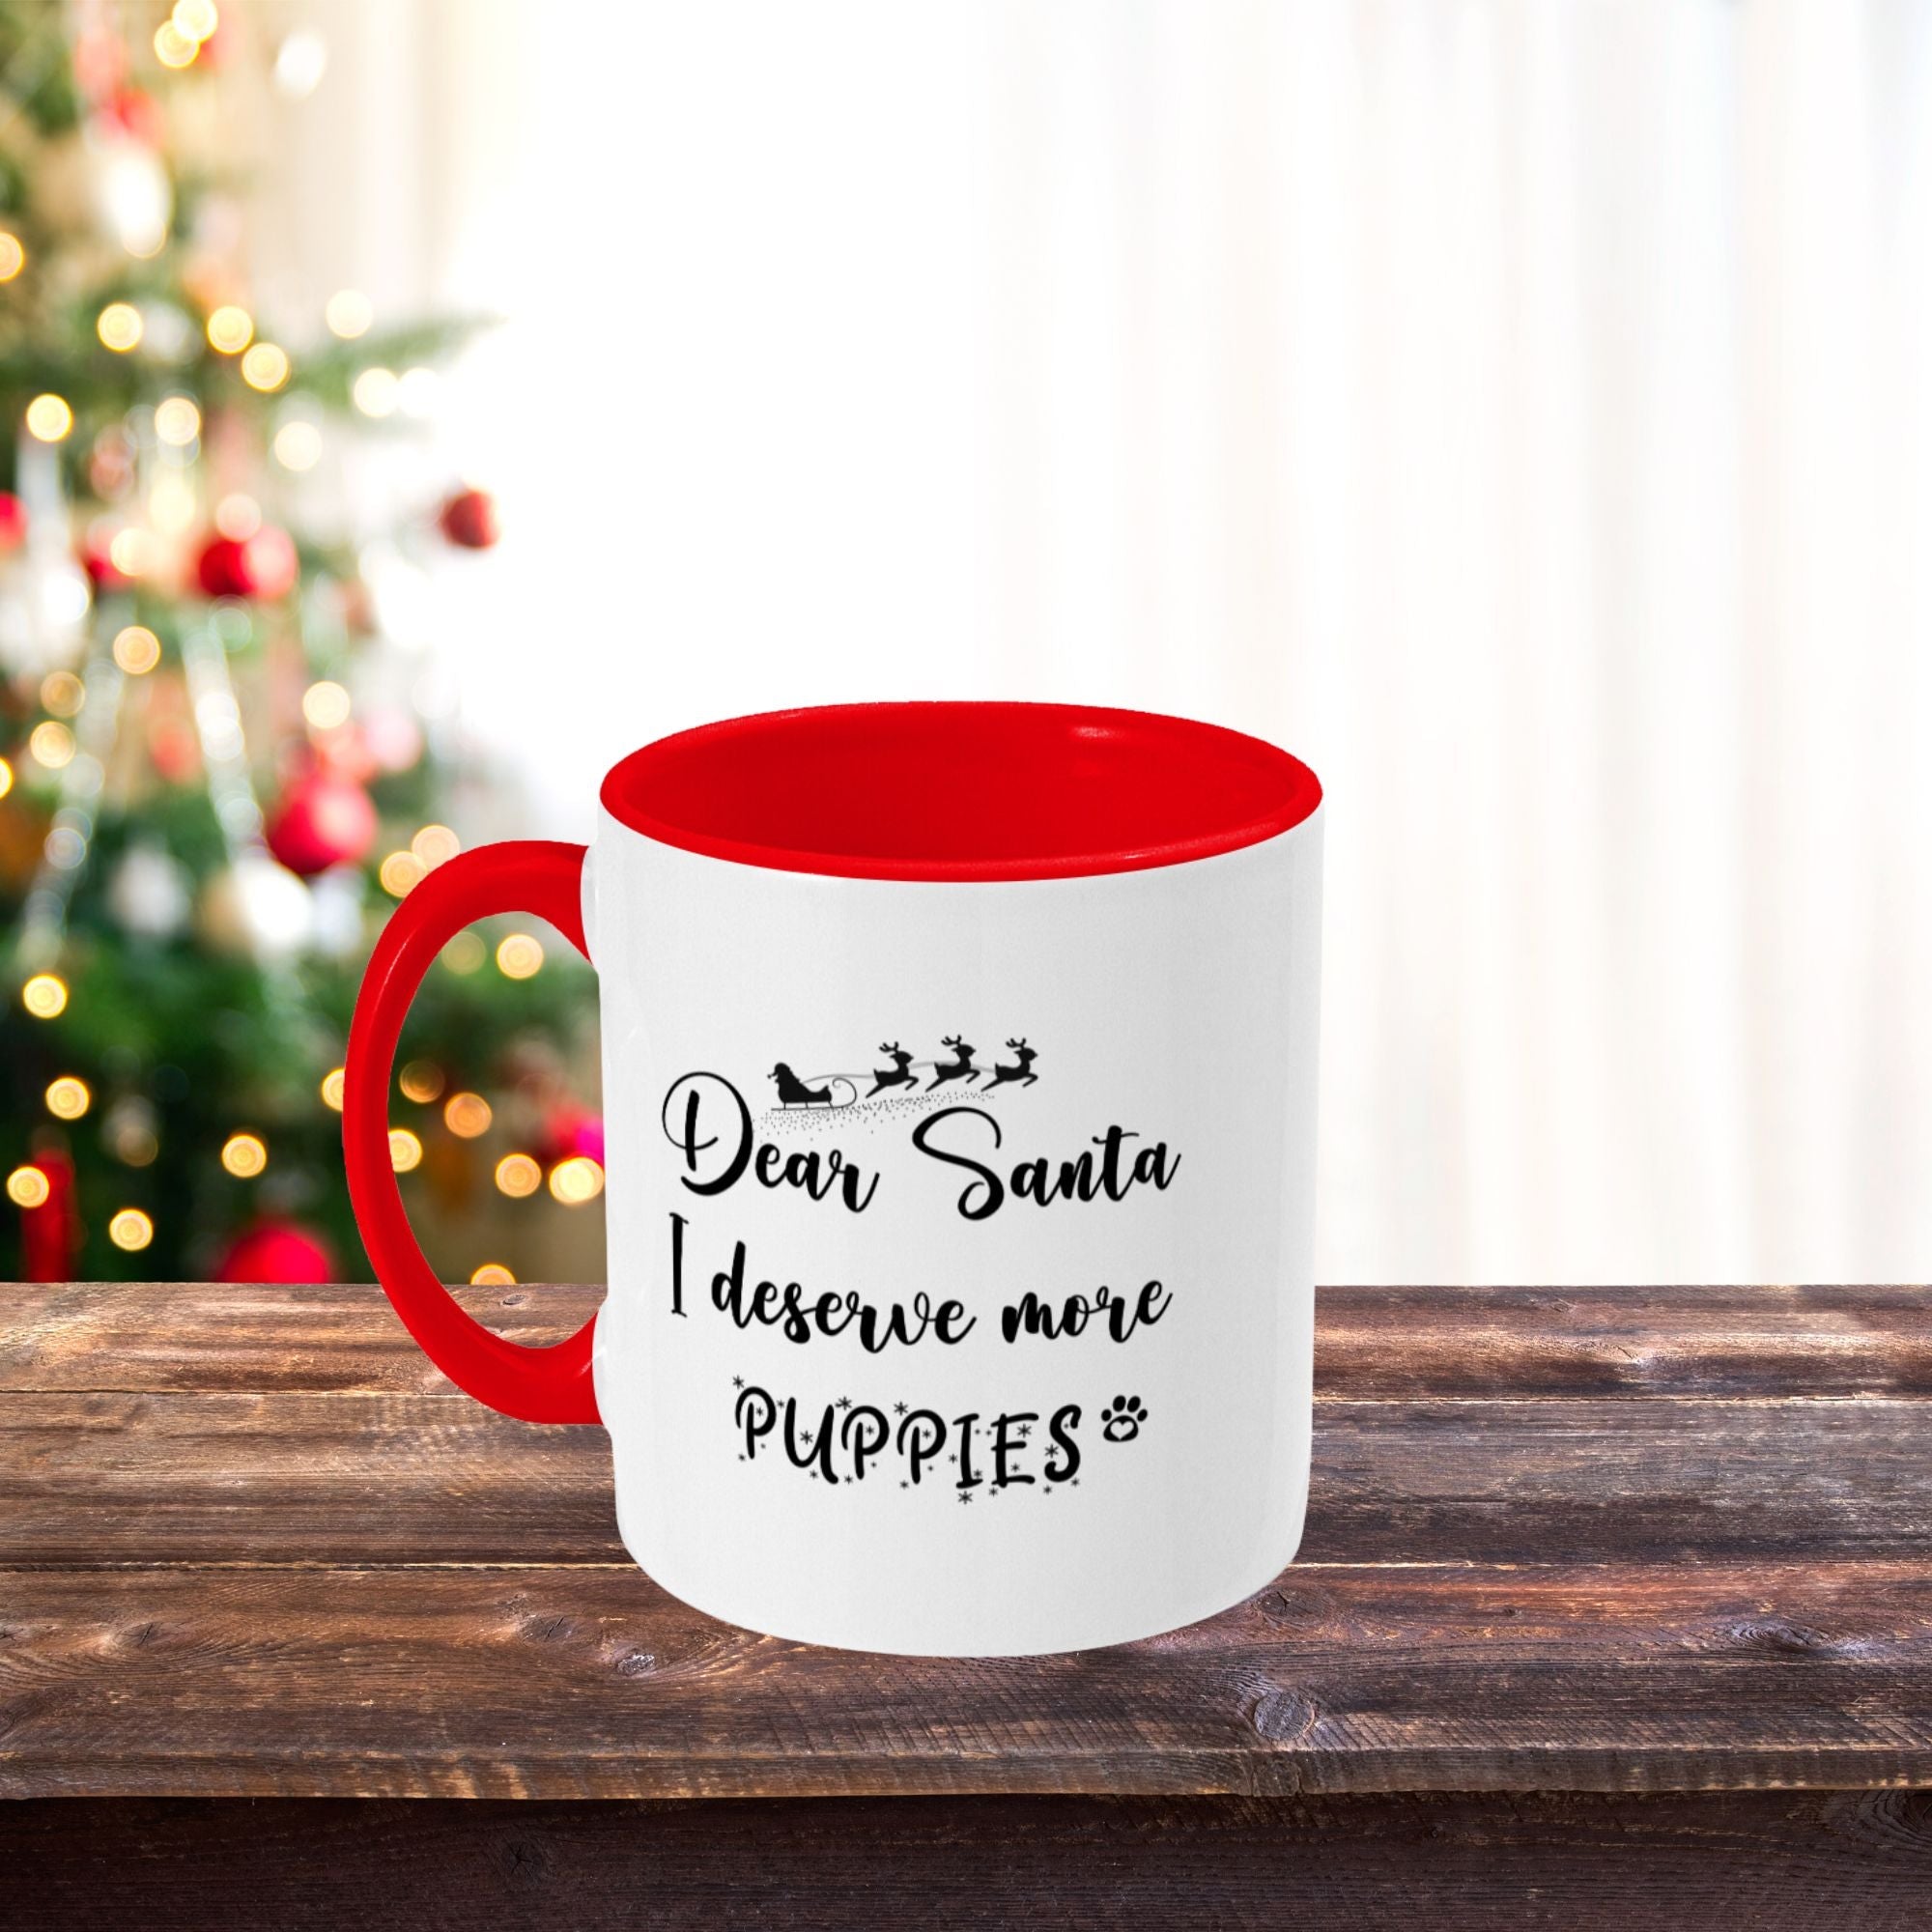 Dear Santa I Deserve More Puppies Mug - Sweetie